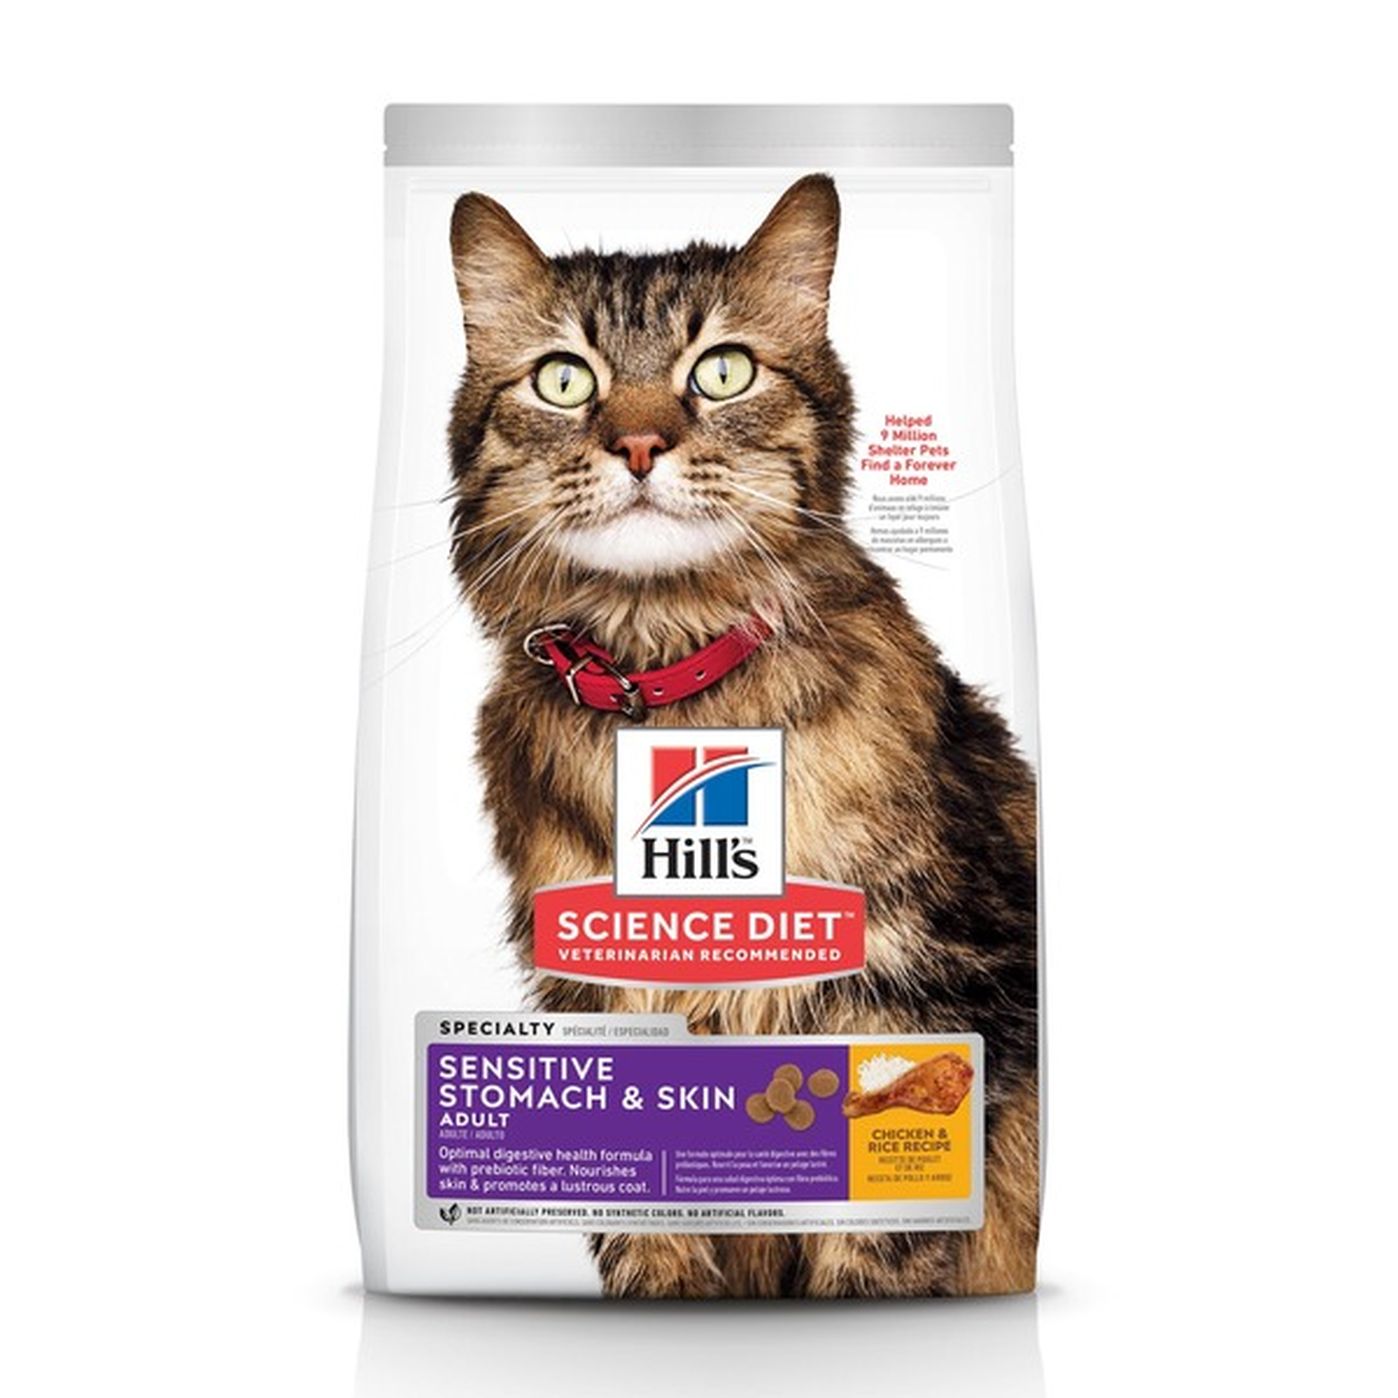 Hill's Science Diet Cat Food, Premium, Sensitive Stomach & Skin, Adult